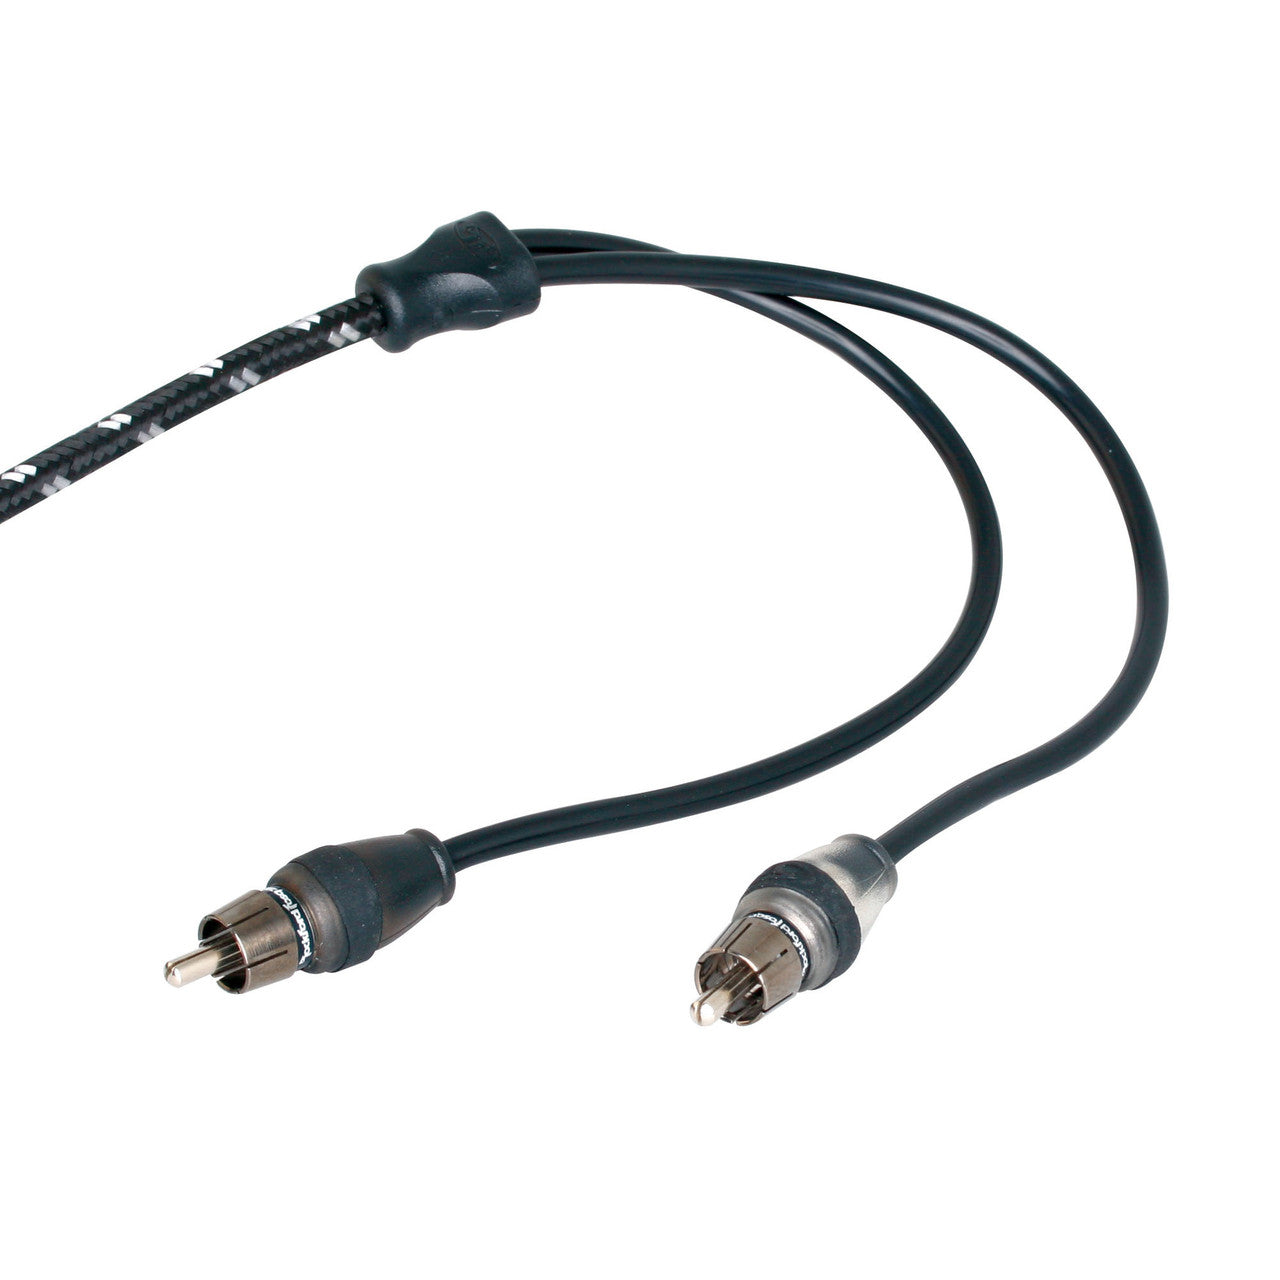 Rockford Fosgate RFIT-6 6 Ft Premium Dual Twist Signal Cable